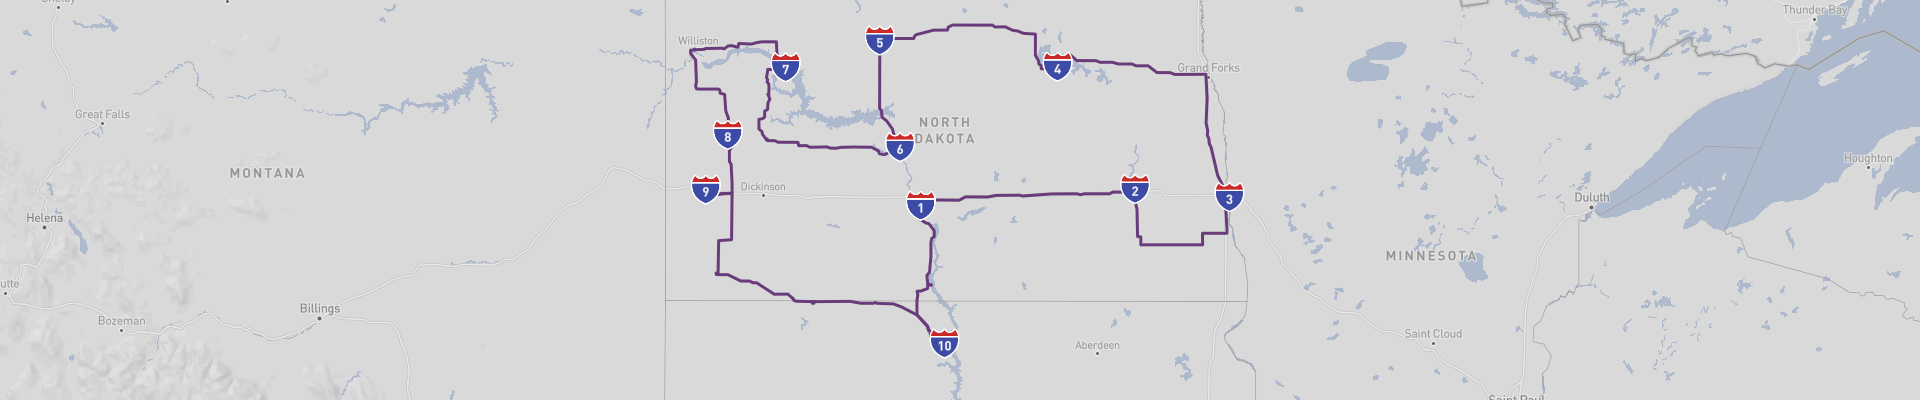 Itinéraire du Dakota du Nord 